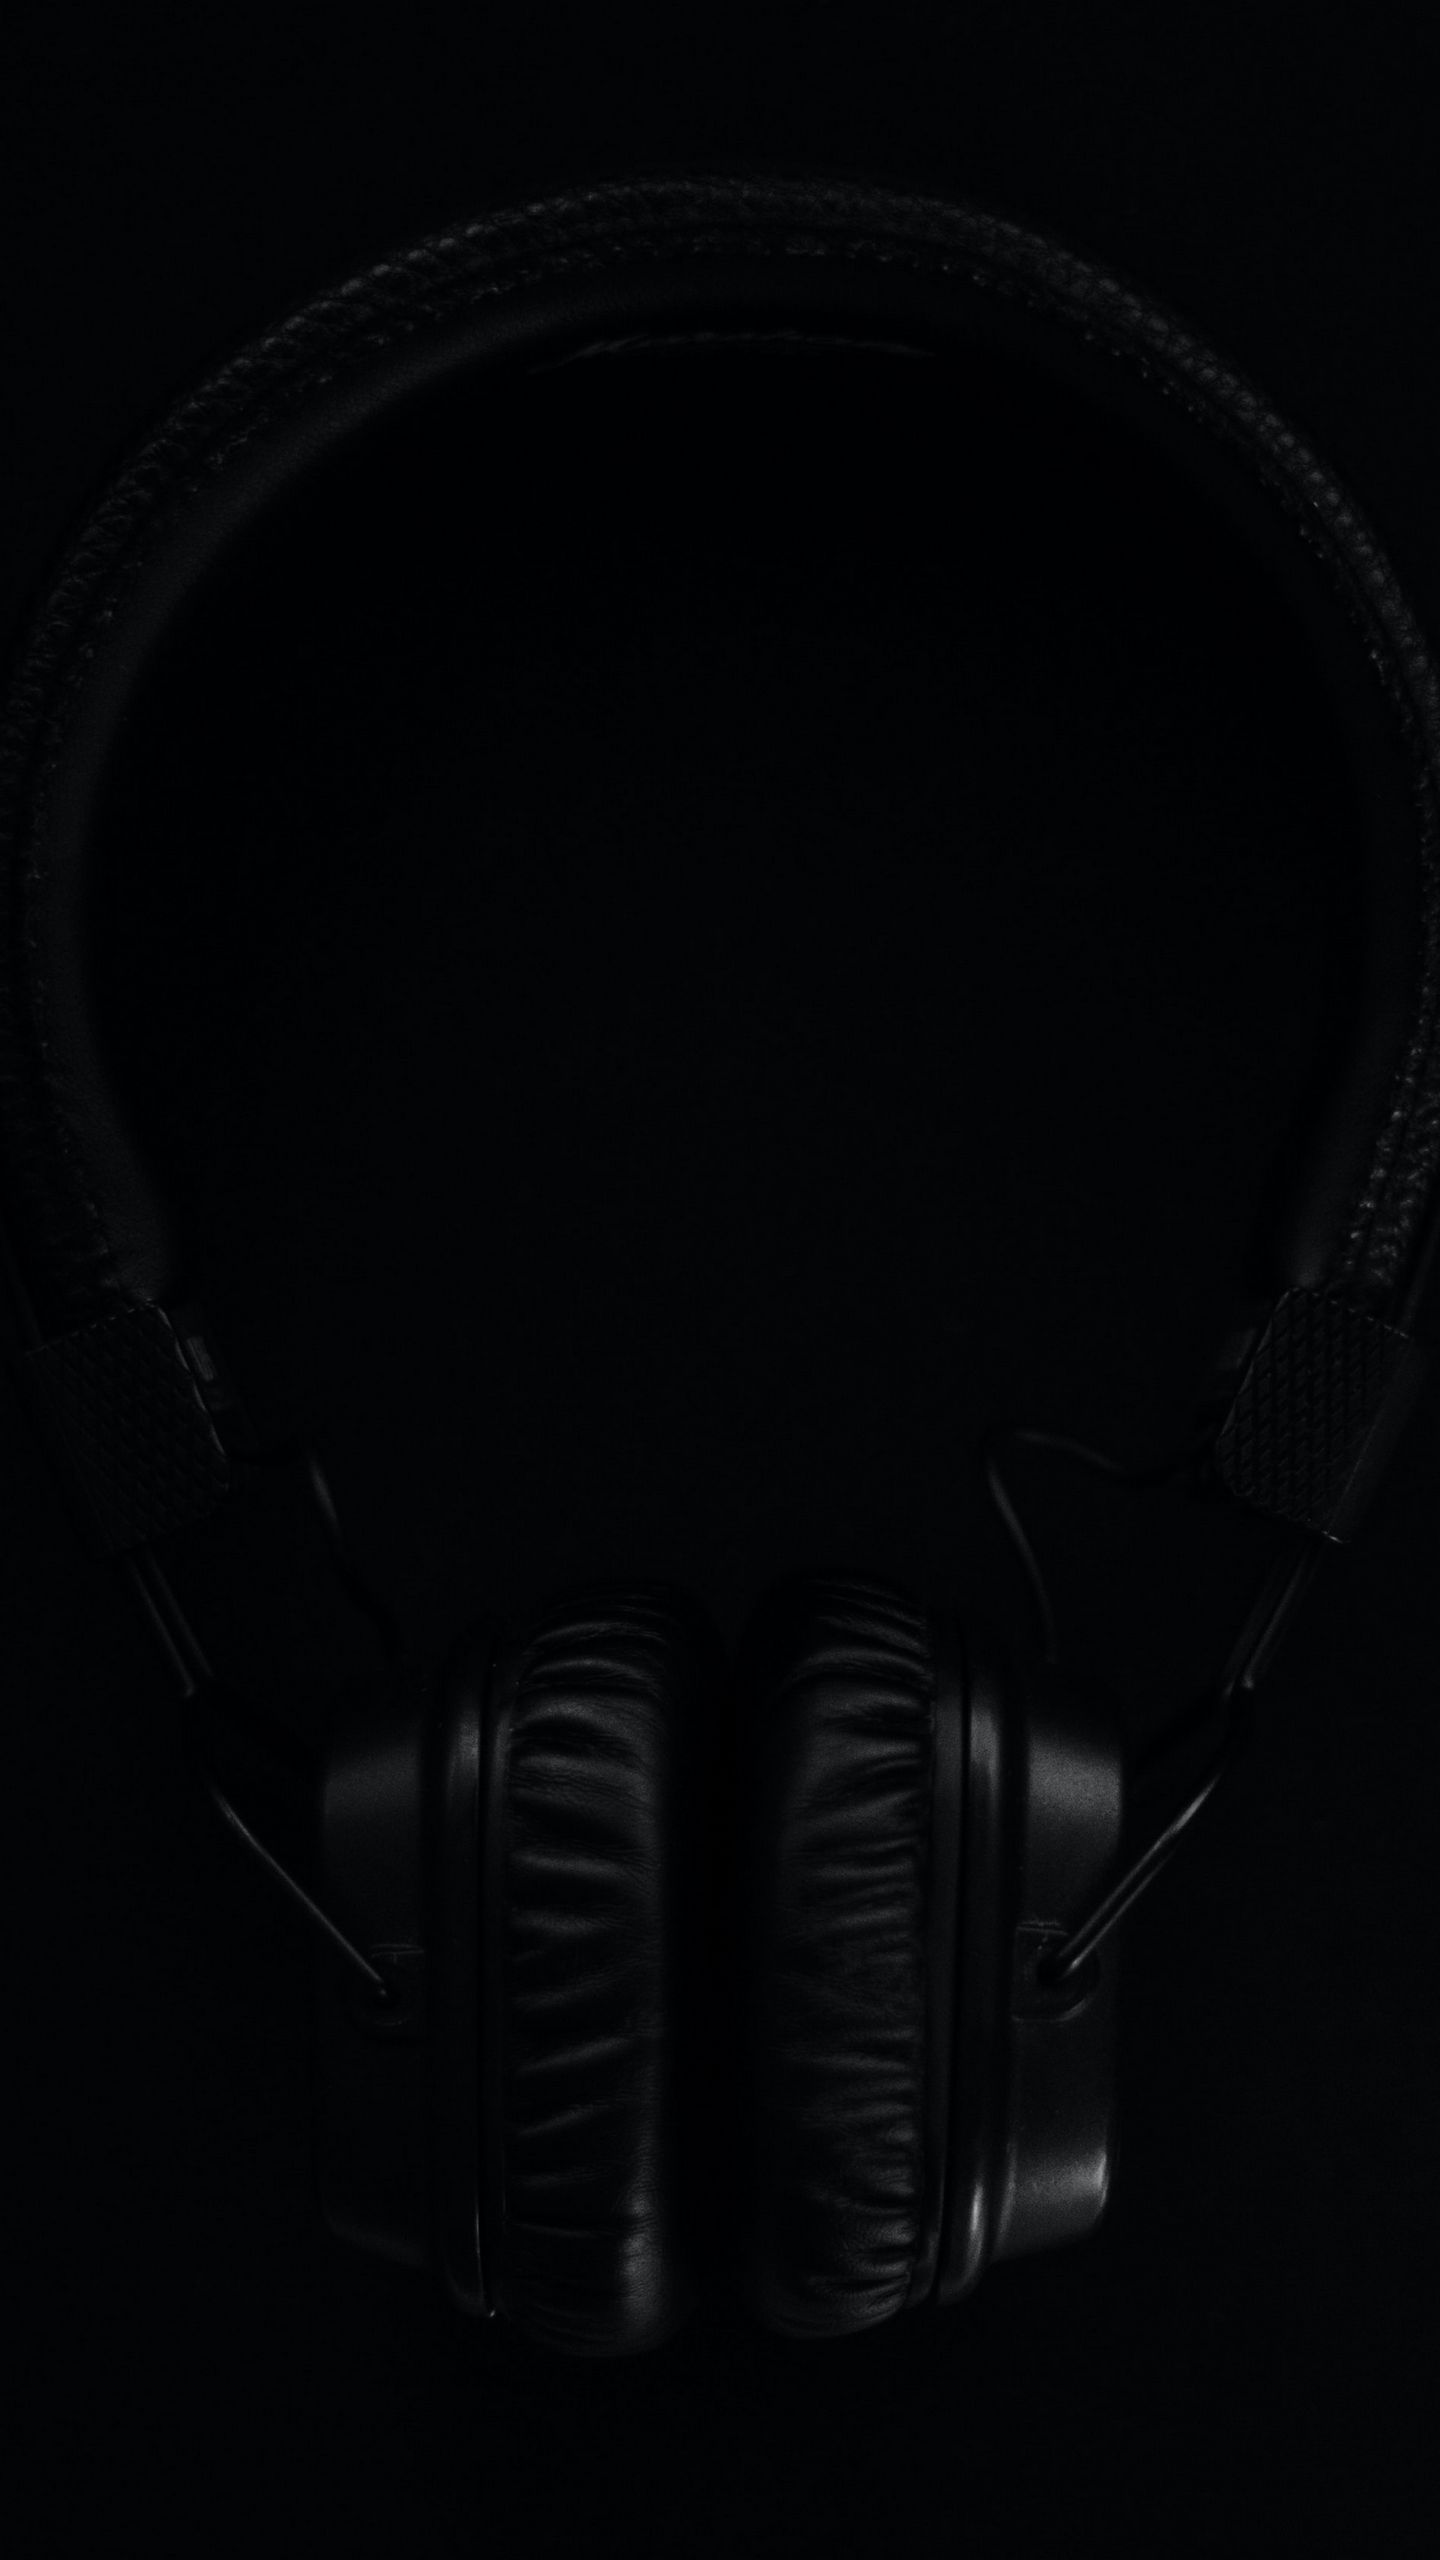 headphones music wallpaper